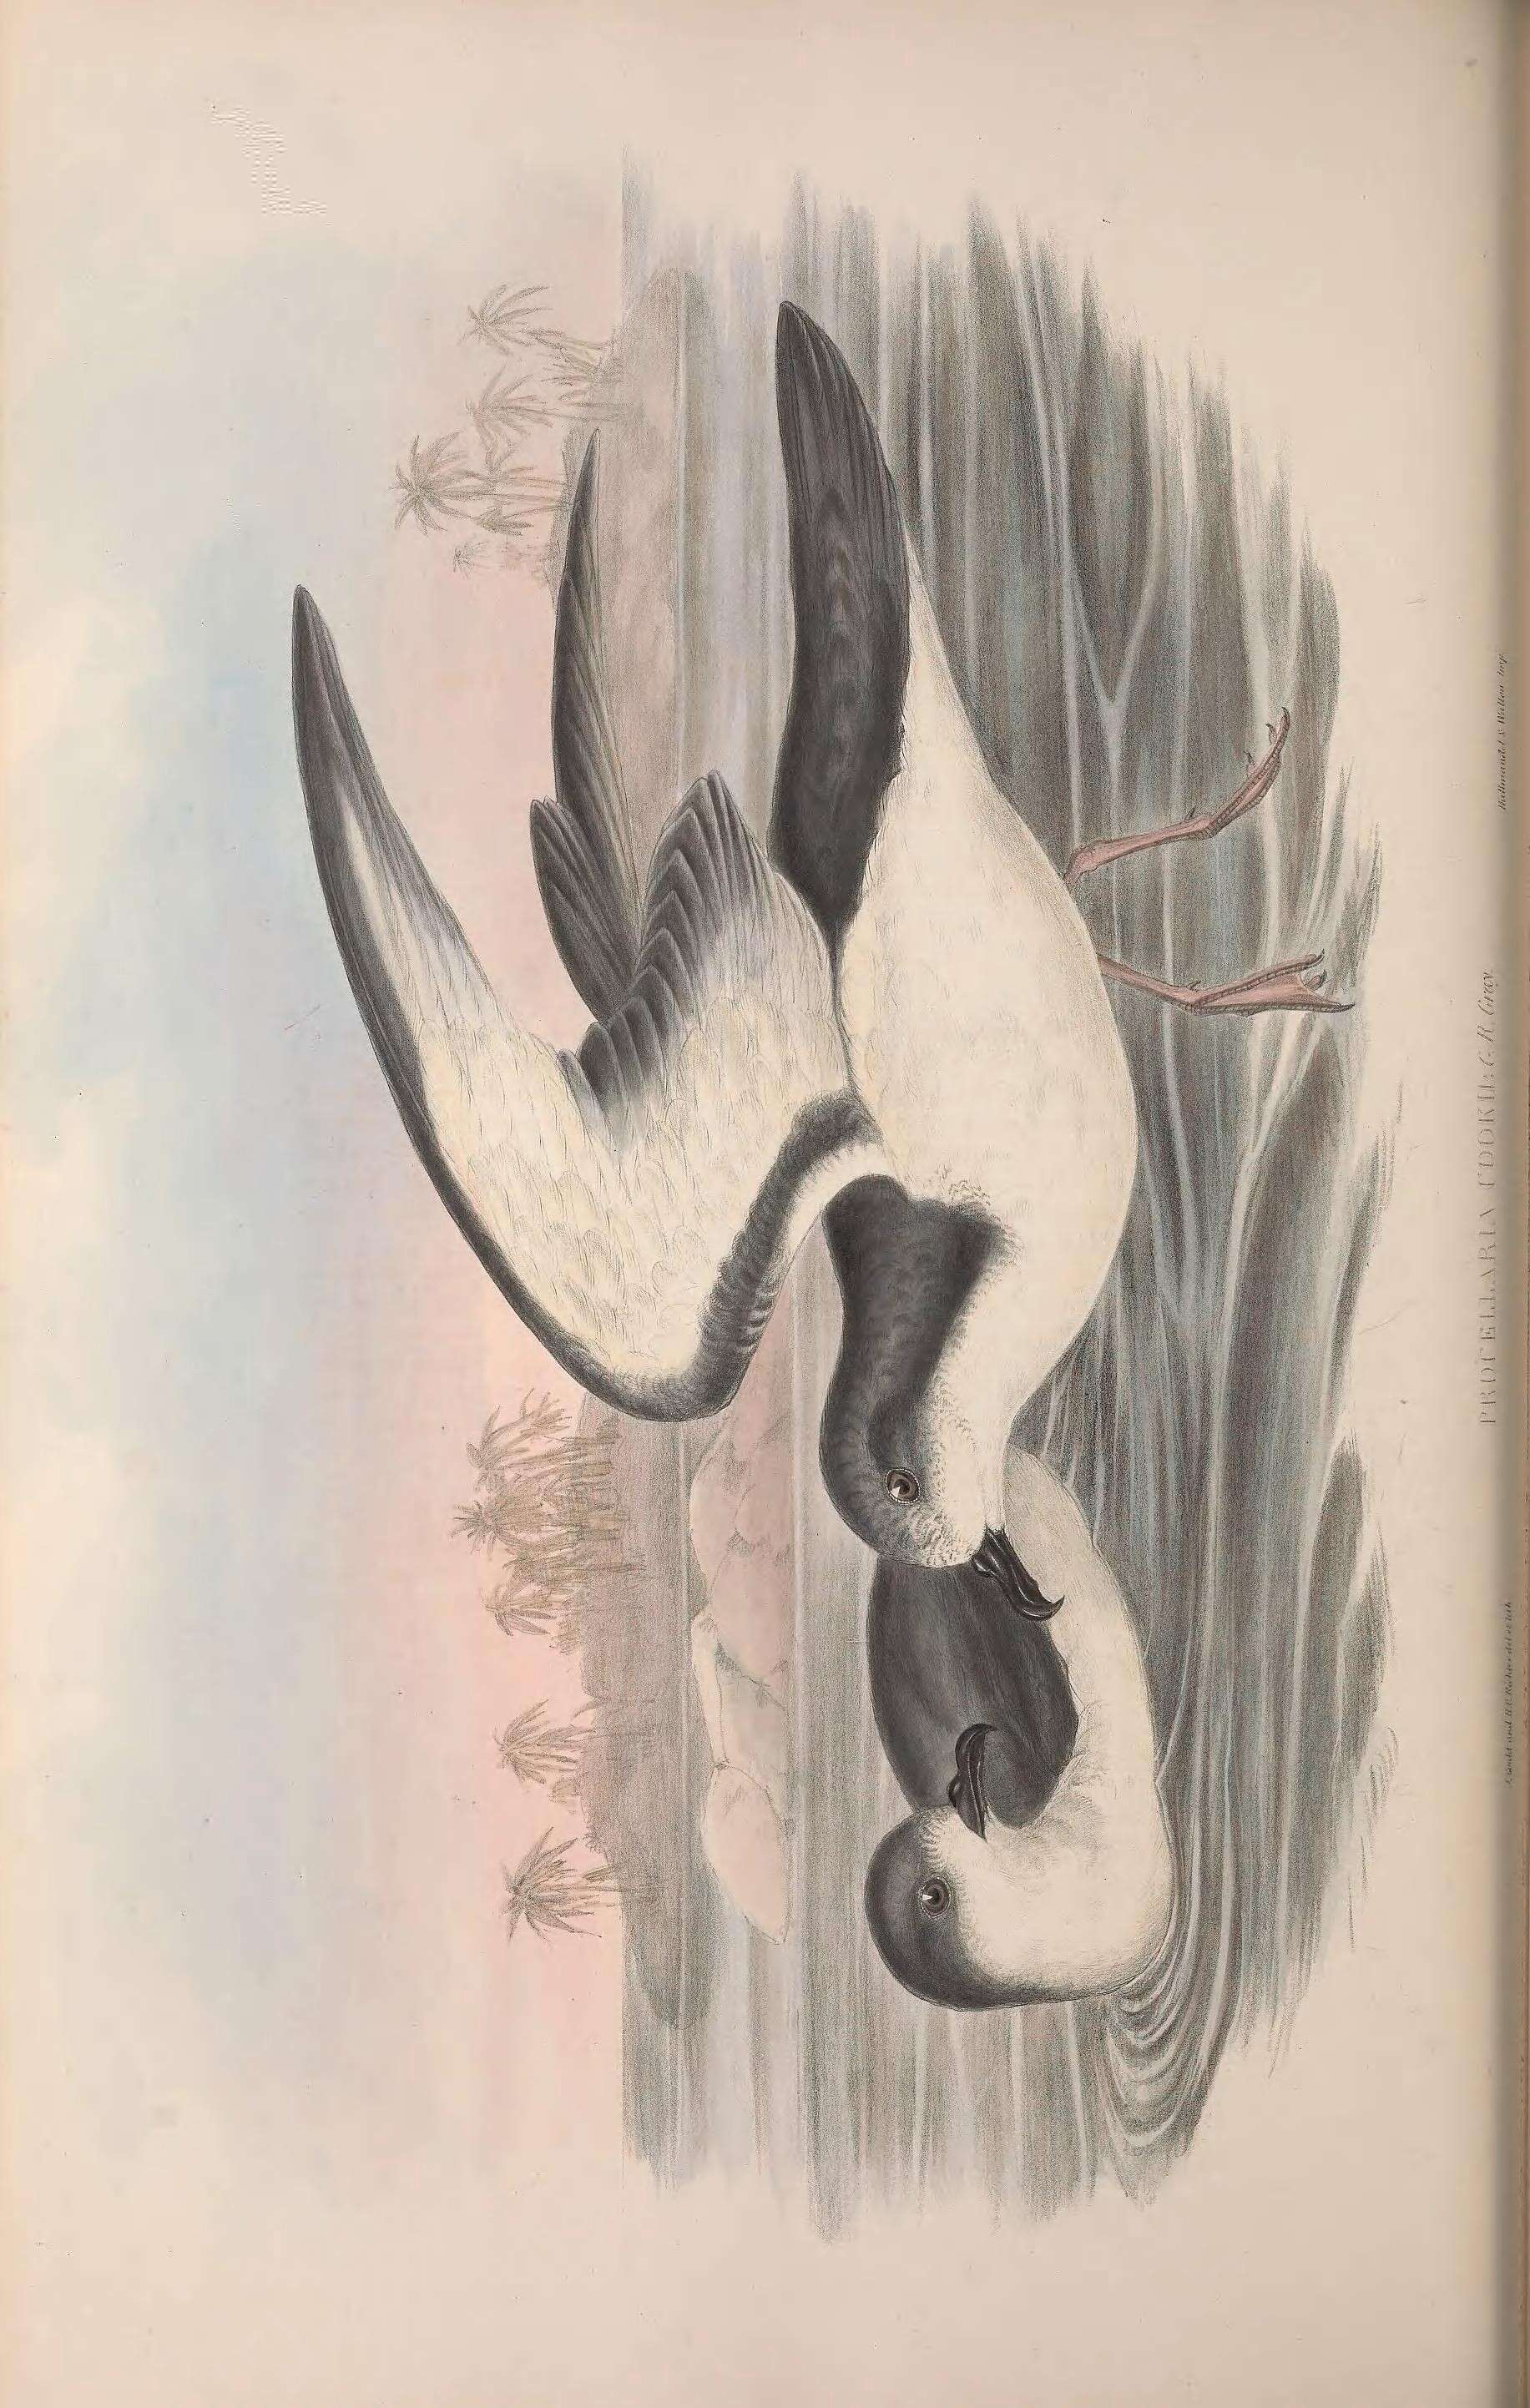 Image of Austrodyptornithes